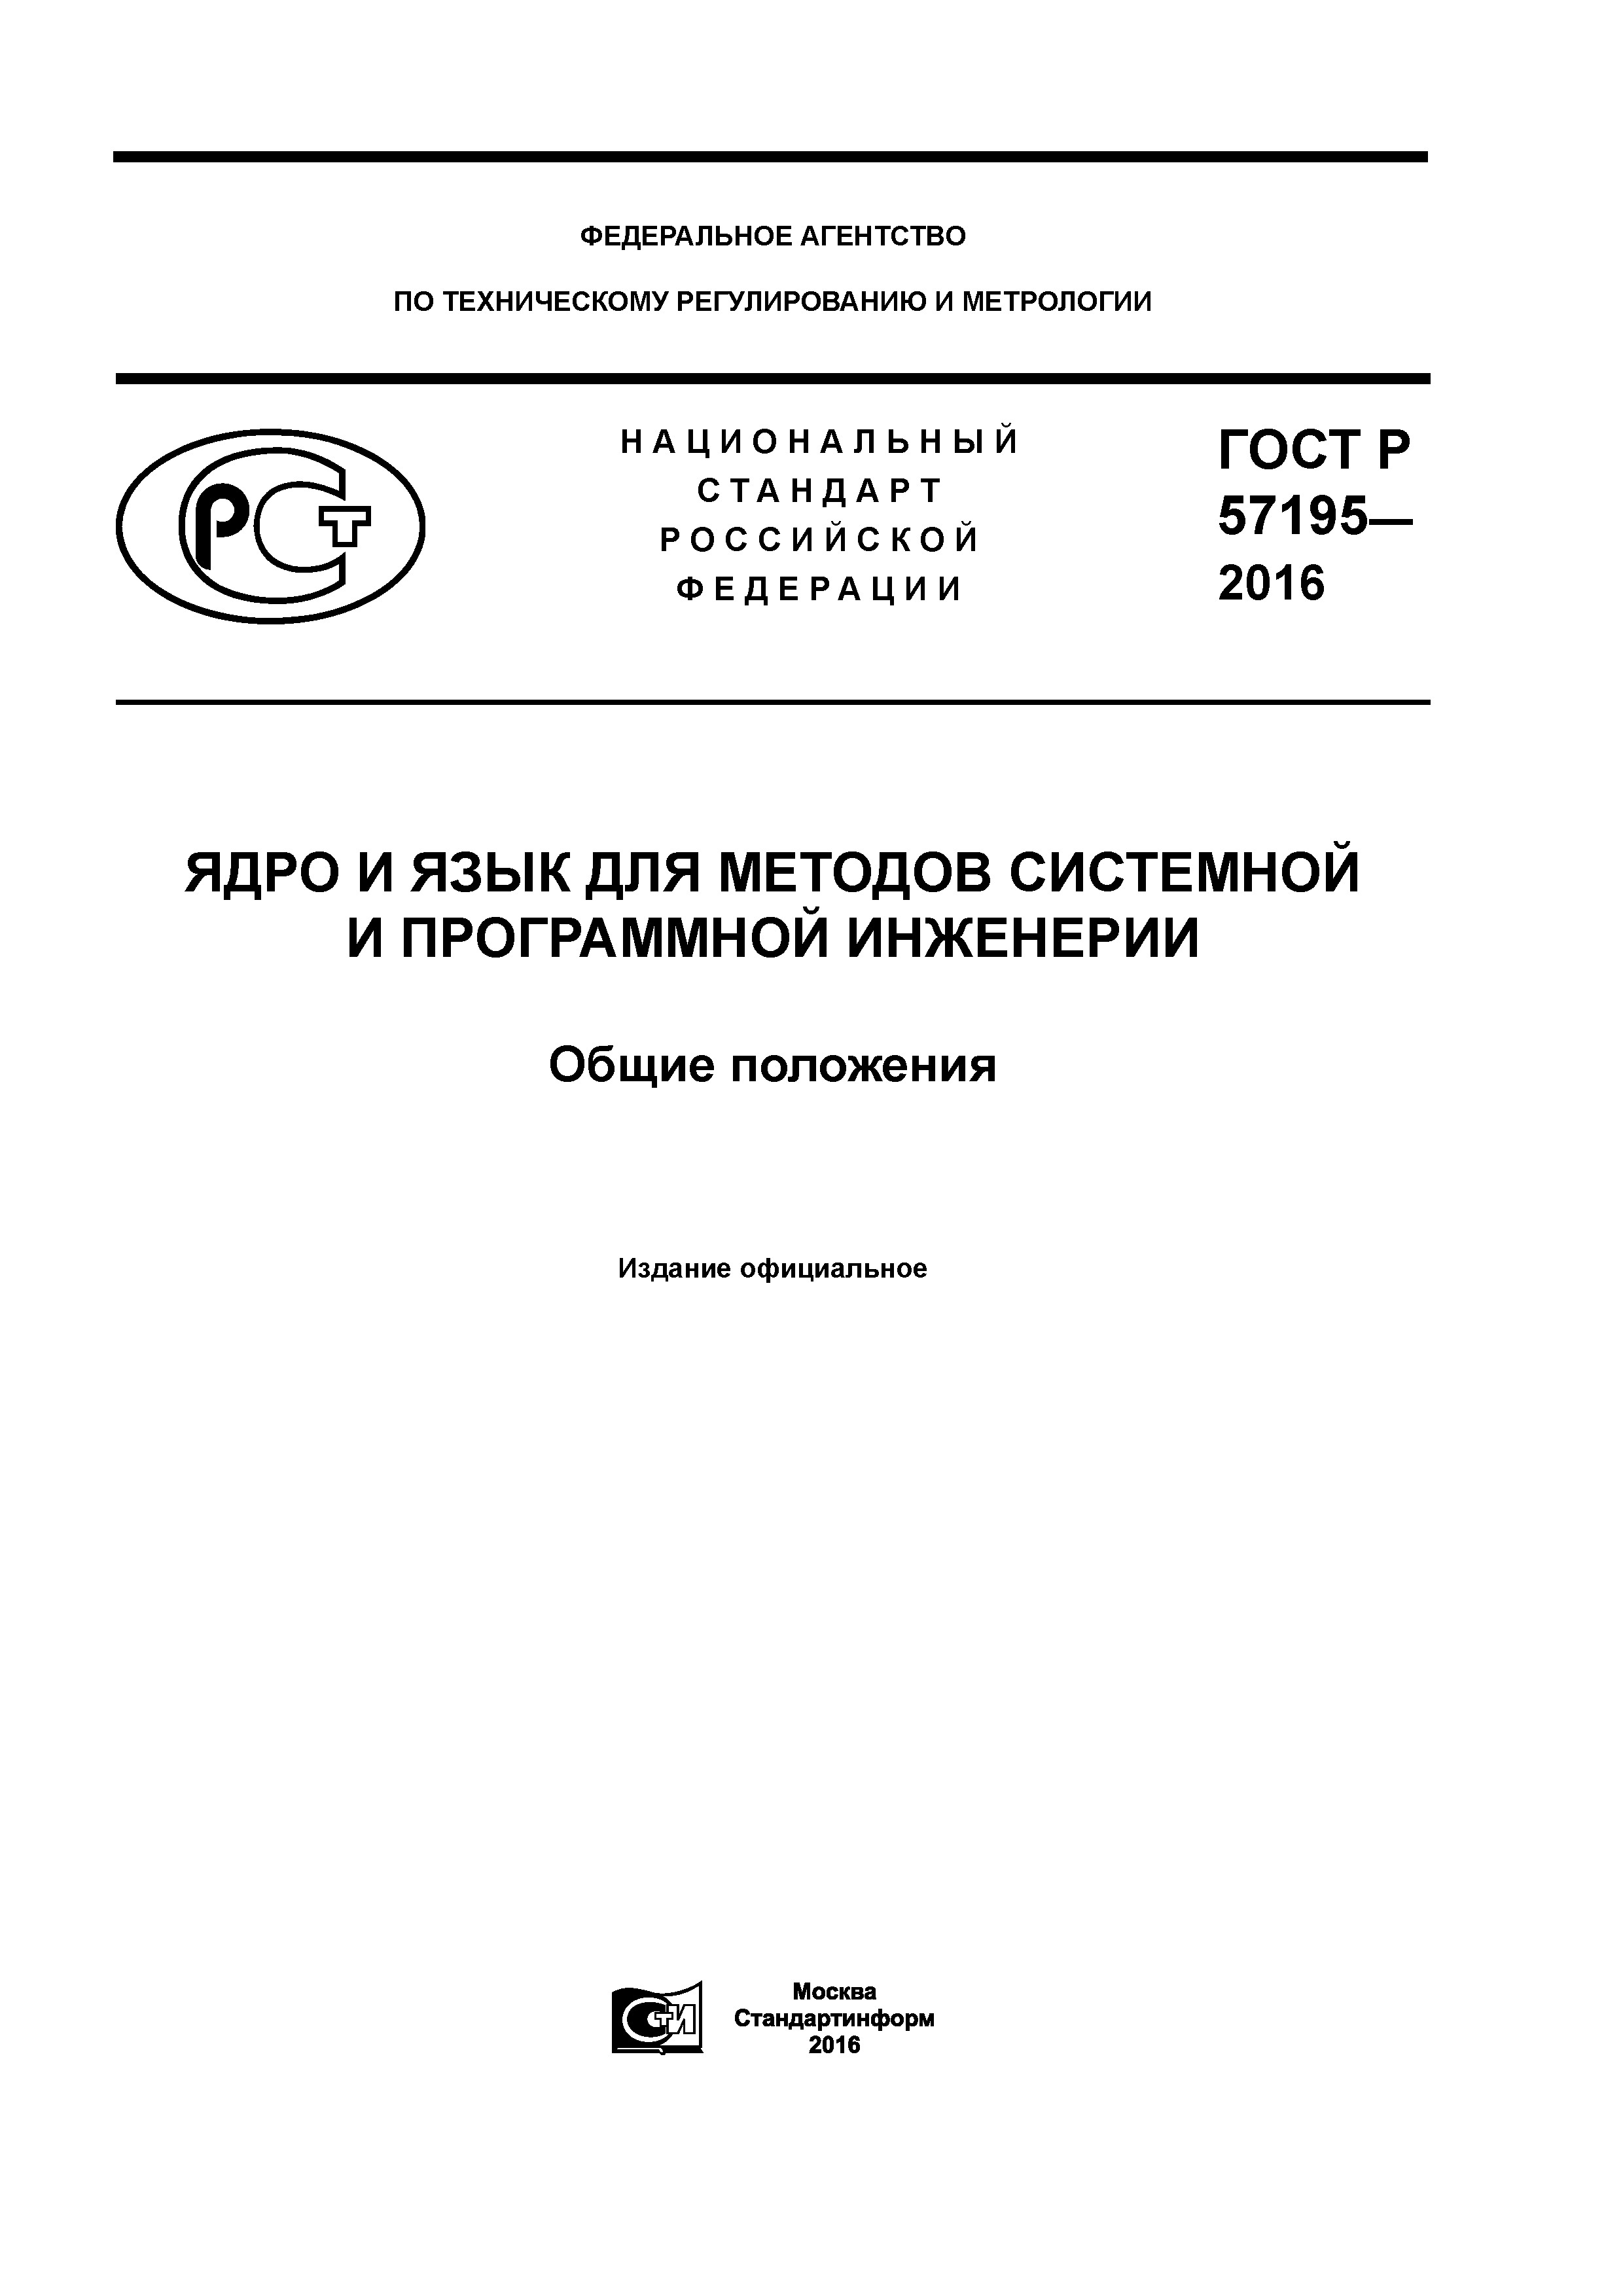 ГОСТ Р 57195-2016